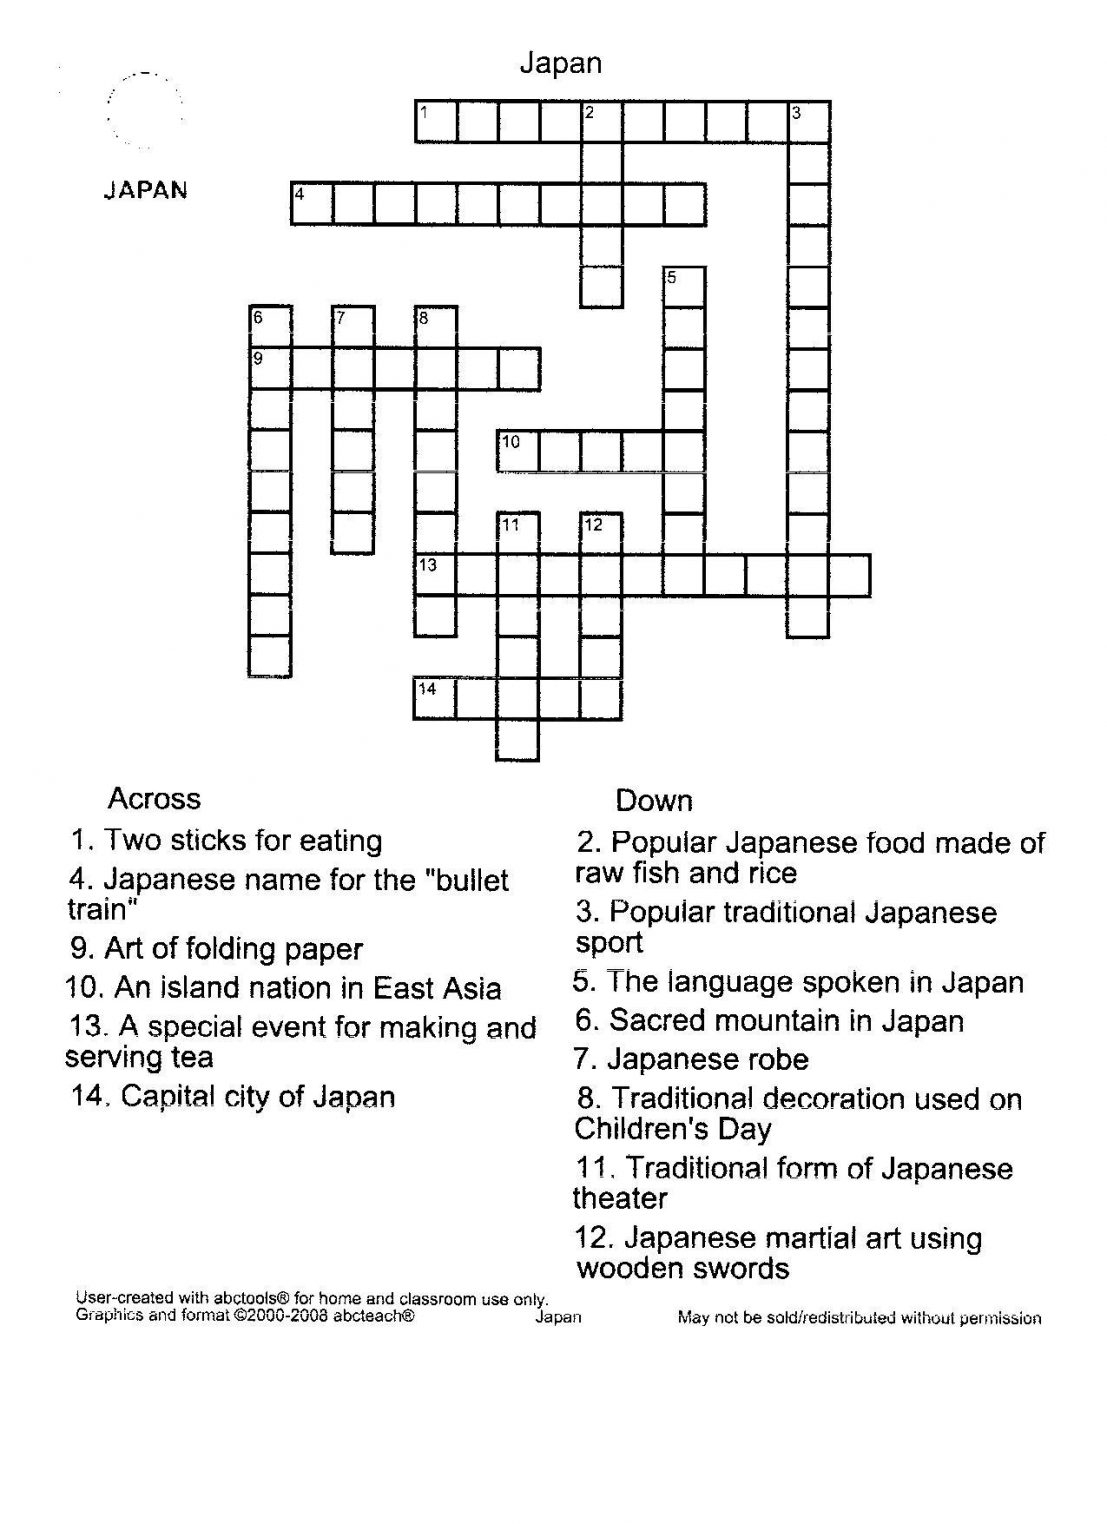 Free Crossword Puzzle Maker Printable - Hashtag Bg - Free Crossword Puzzle Maker Printable